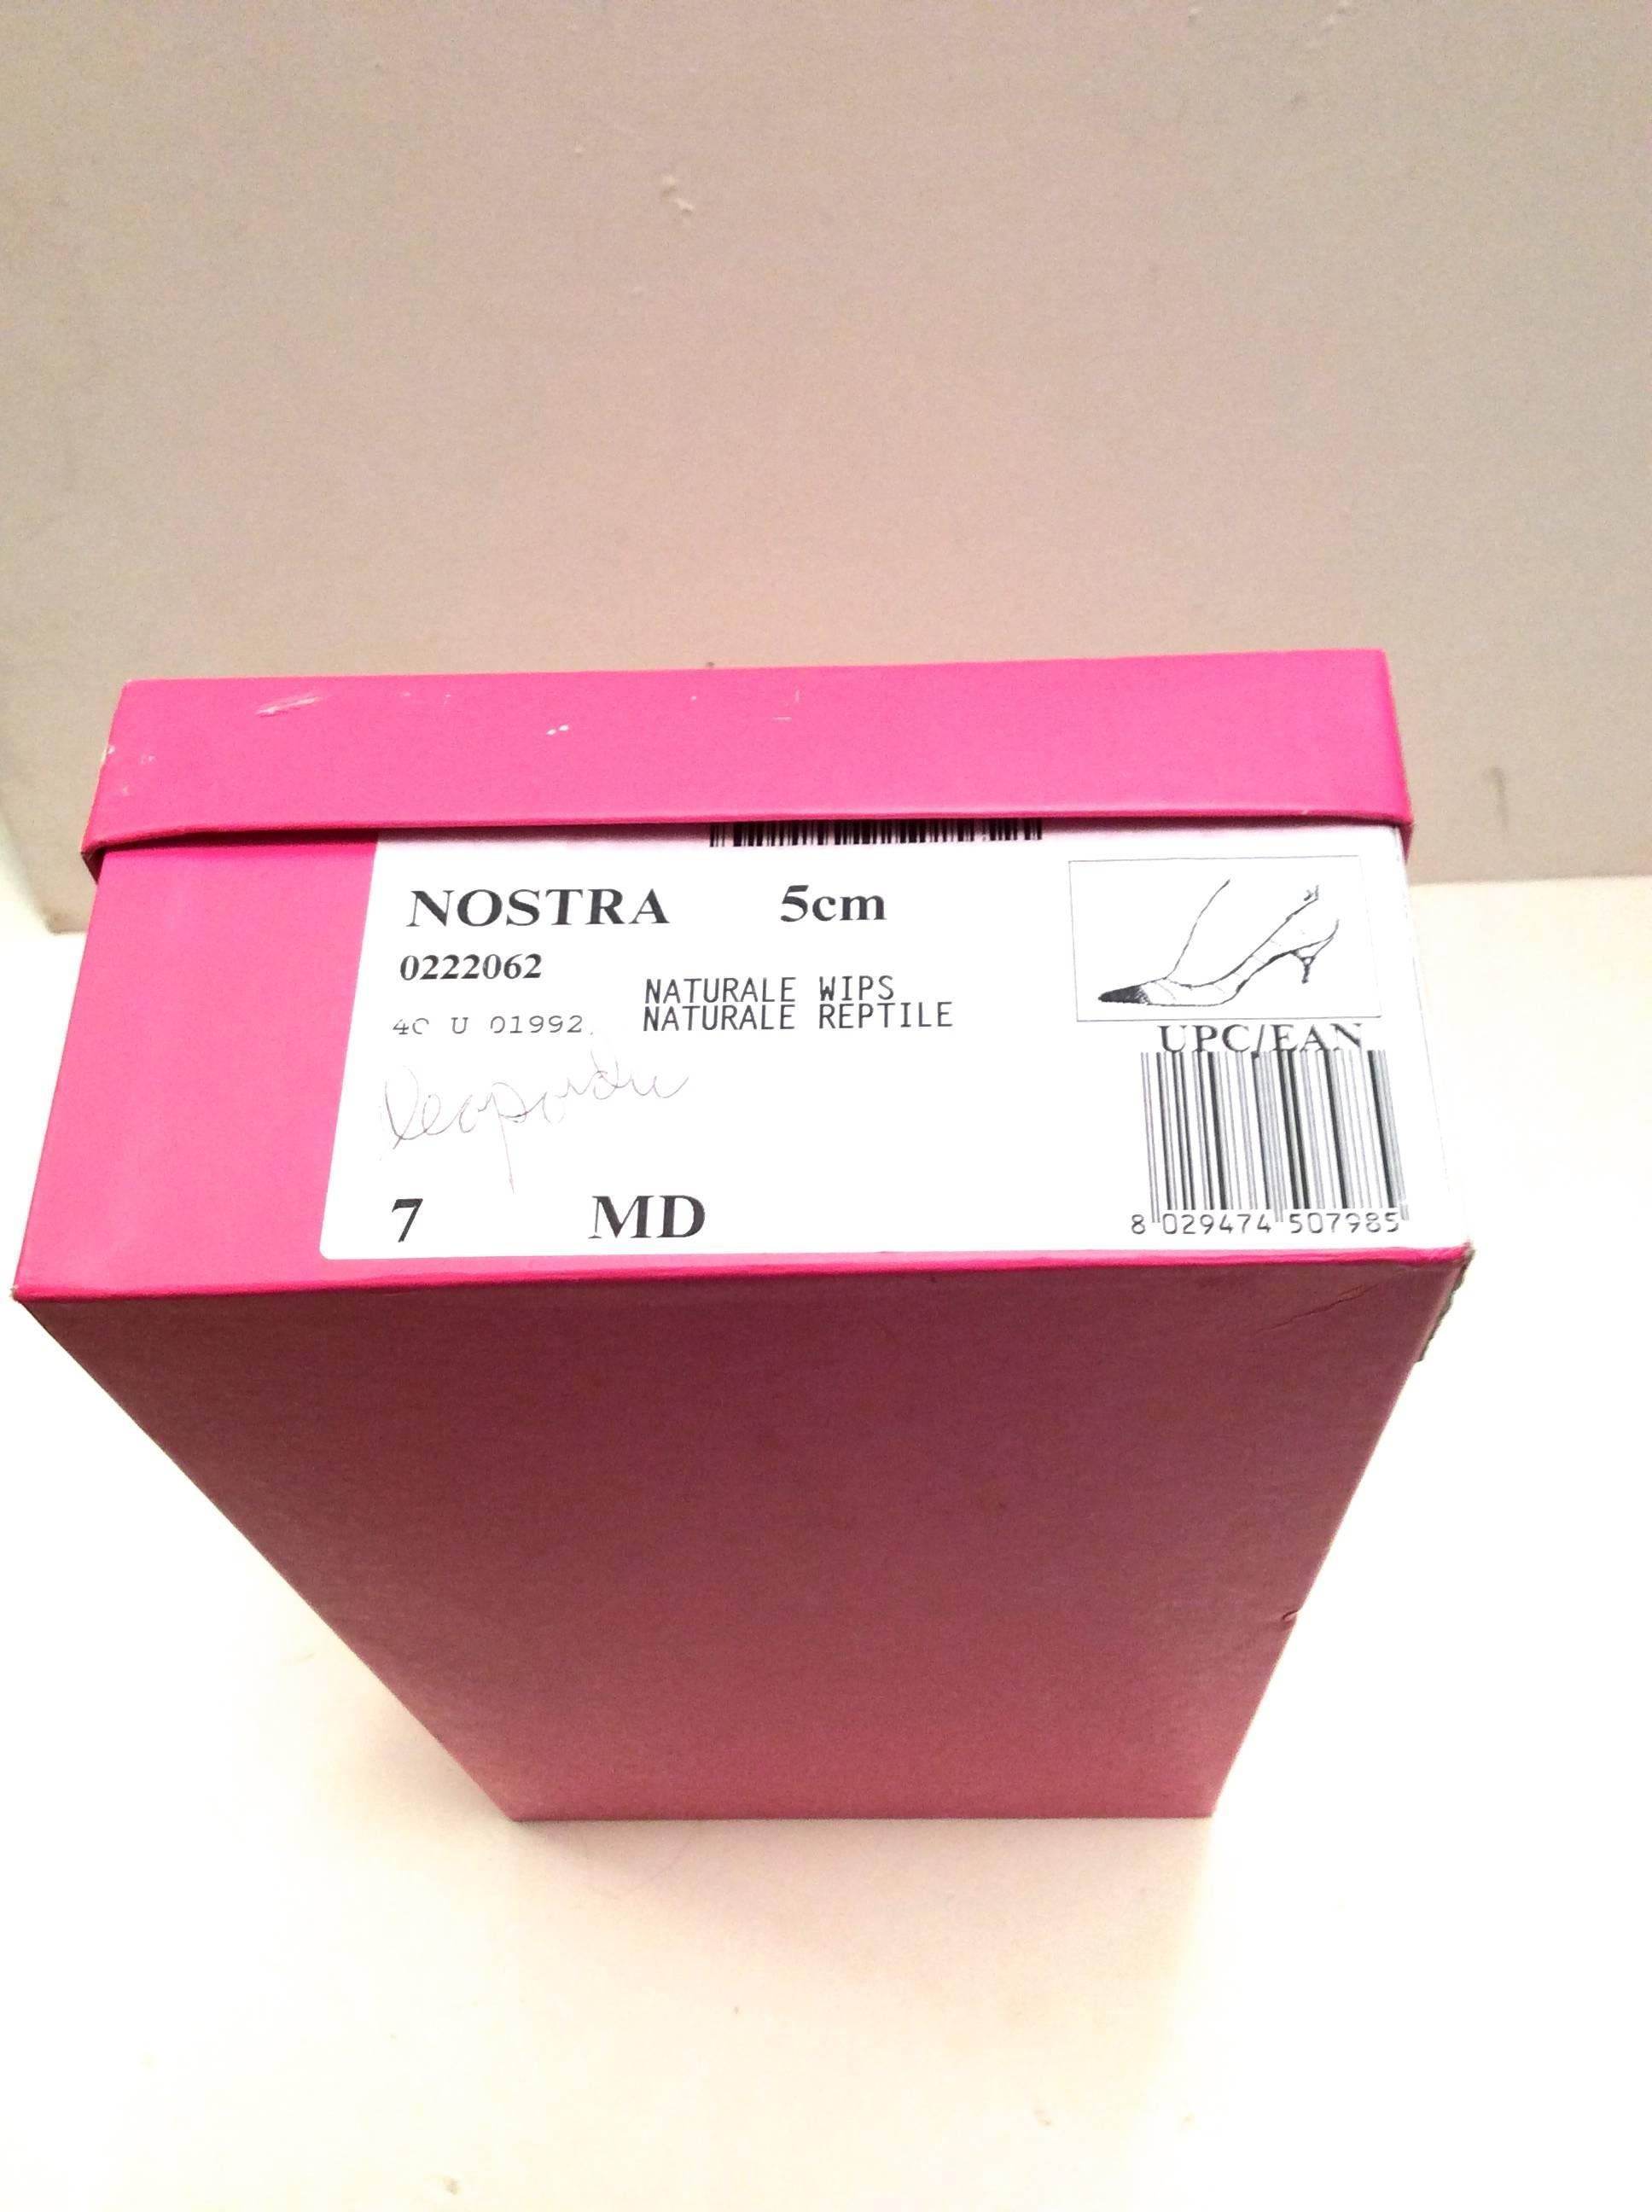 1980's Emanuel Ungaro Shoes - Original Box For Sale 1